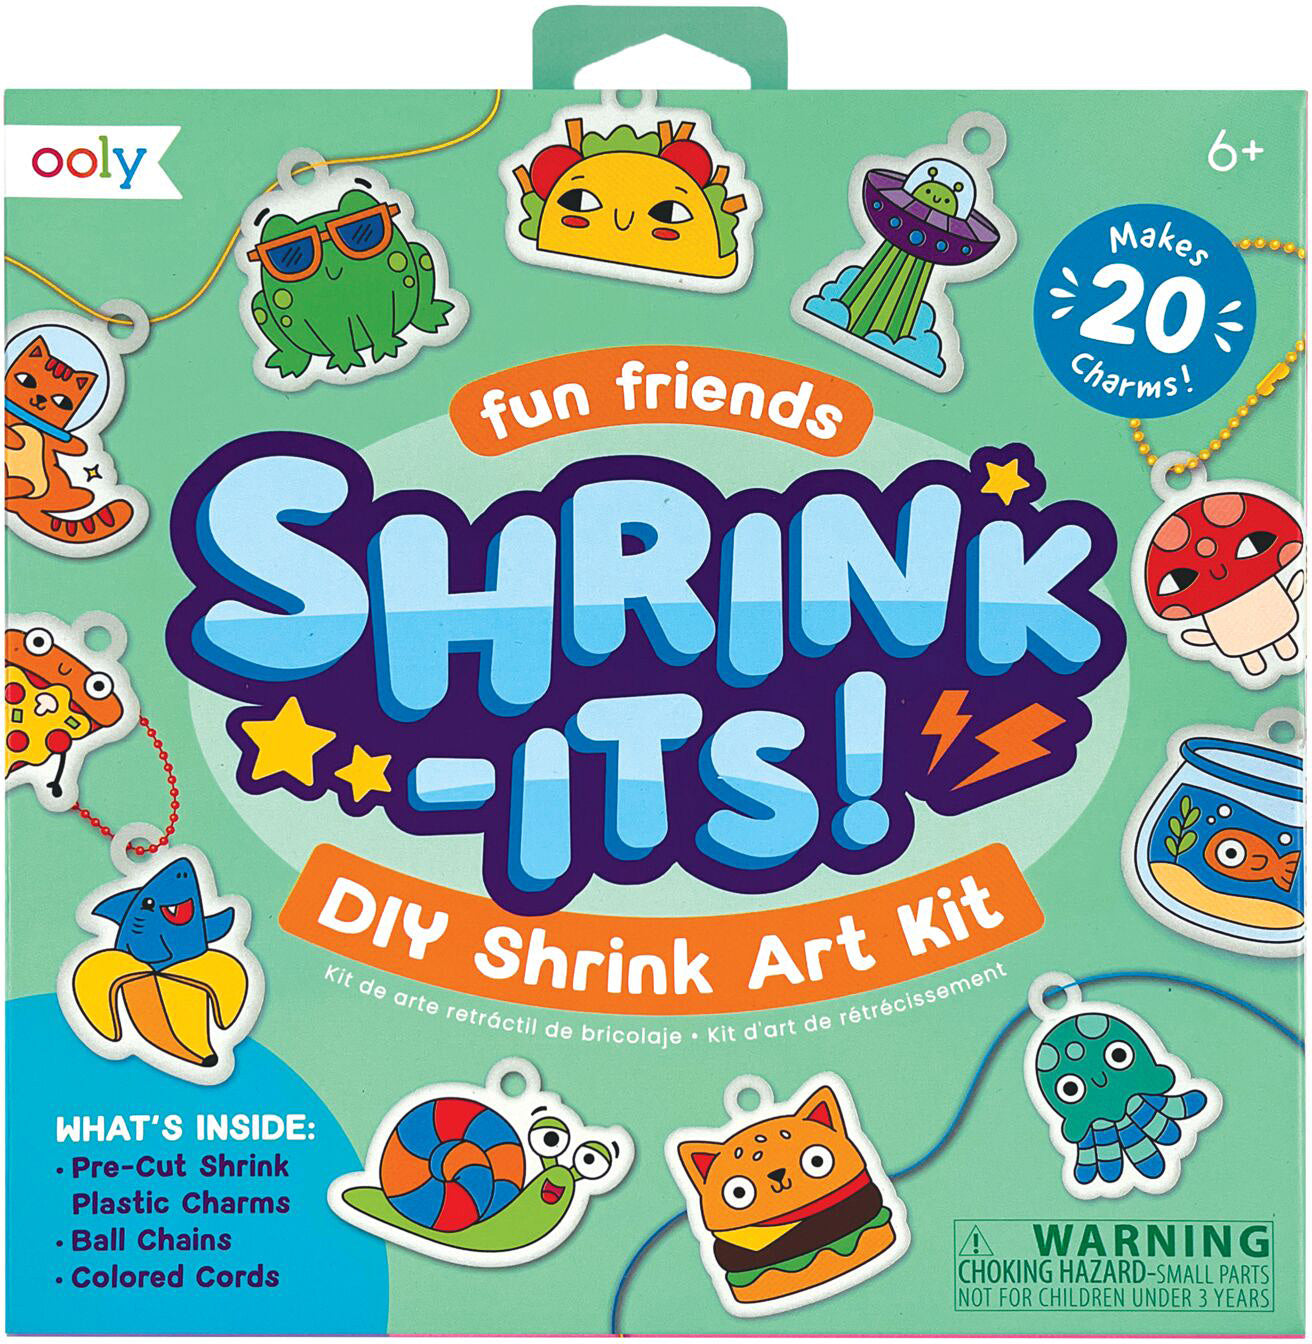 Shrink-Its! Fun Friends DIY Shrink Art Kit